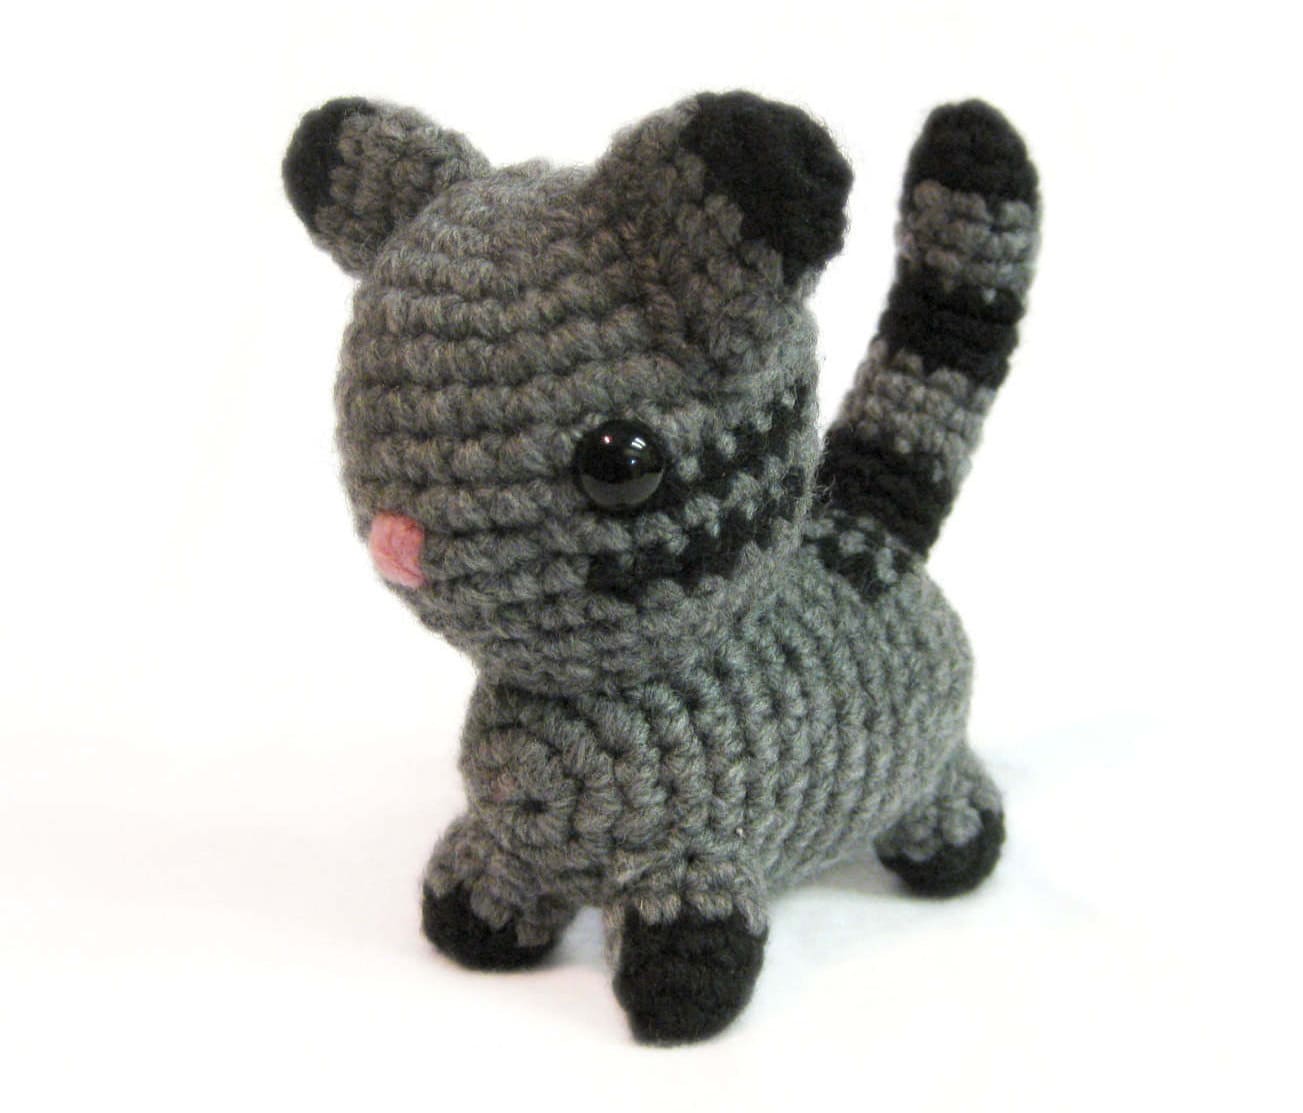 Crochet plush cat for baby gift, stuffed animal, cat plushie, baby gift toy